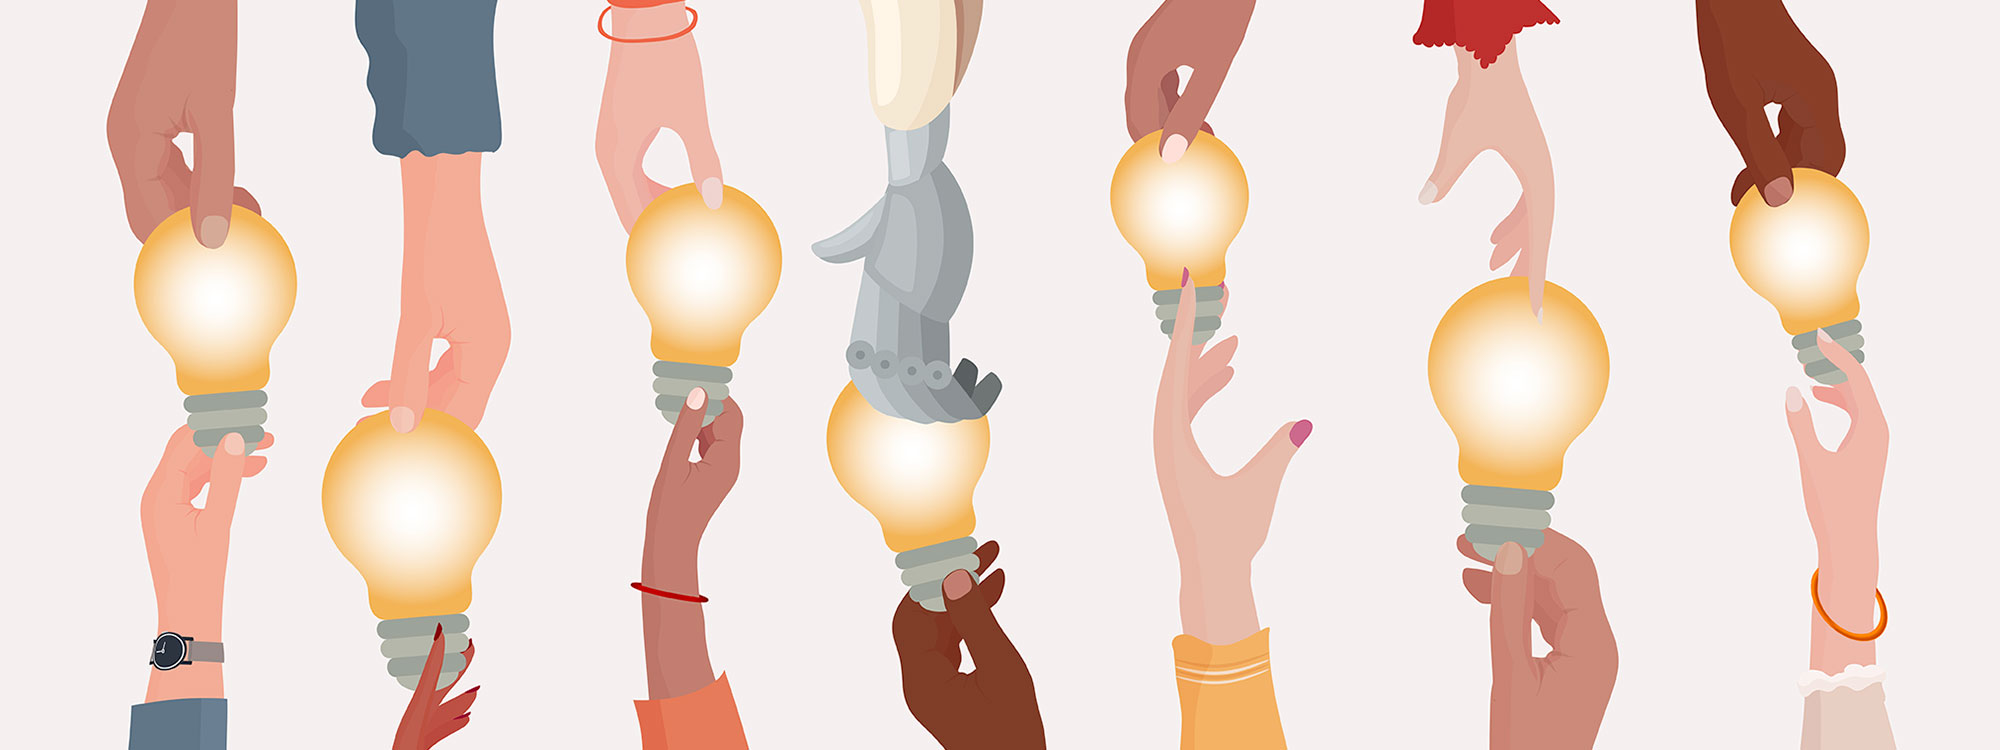 Illustration of diverse hands holding lightbulbs.